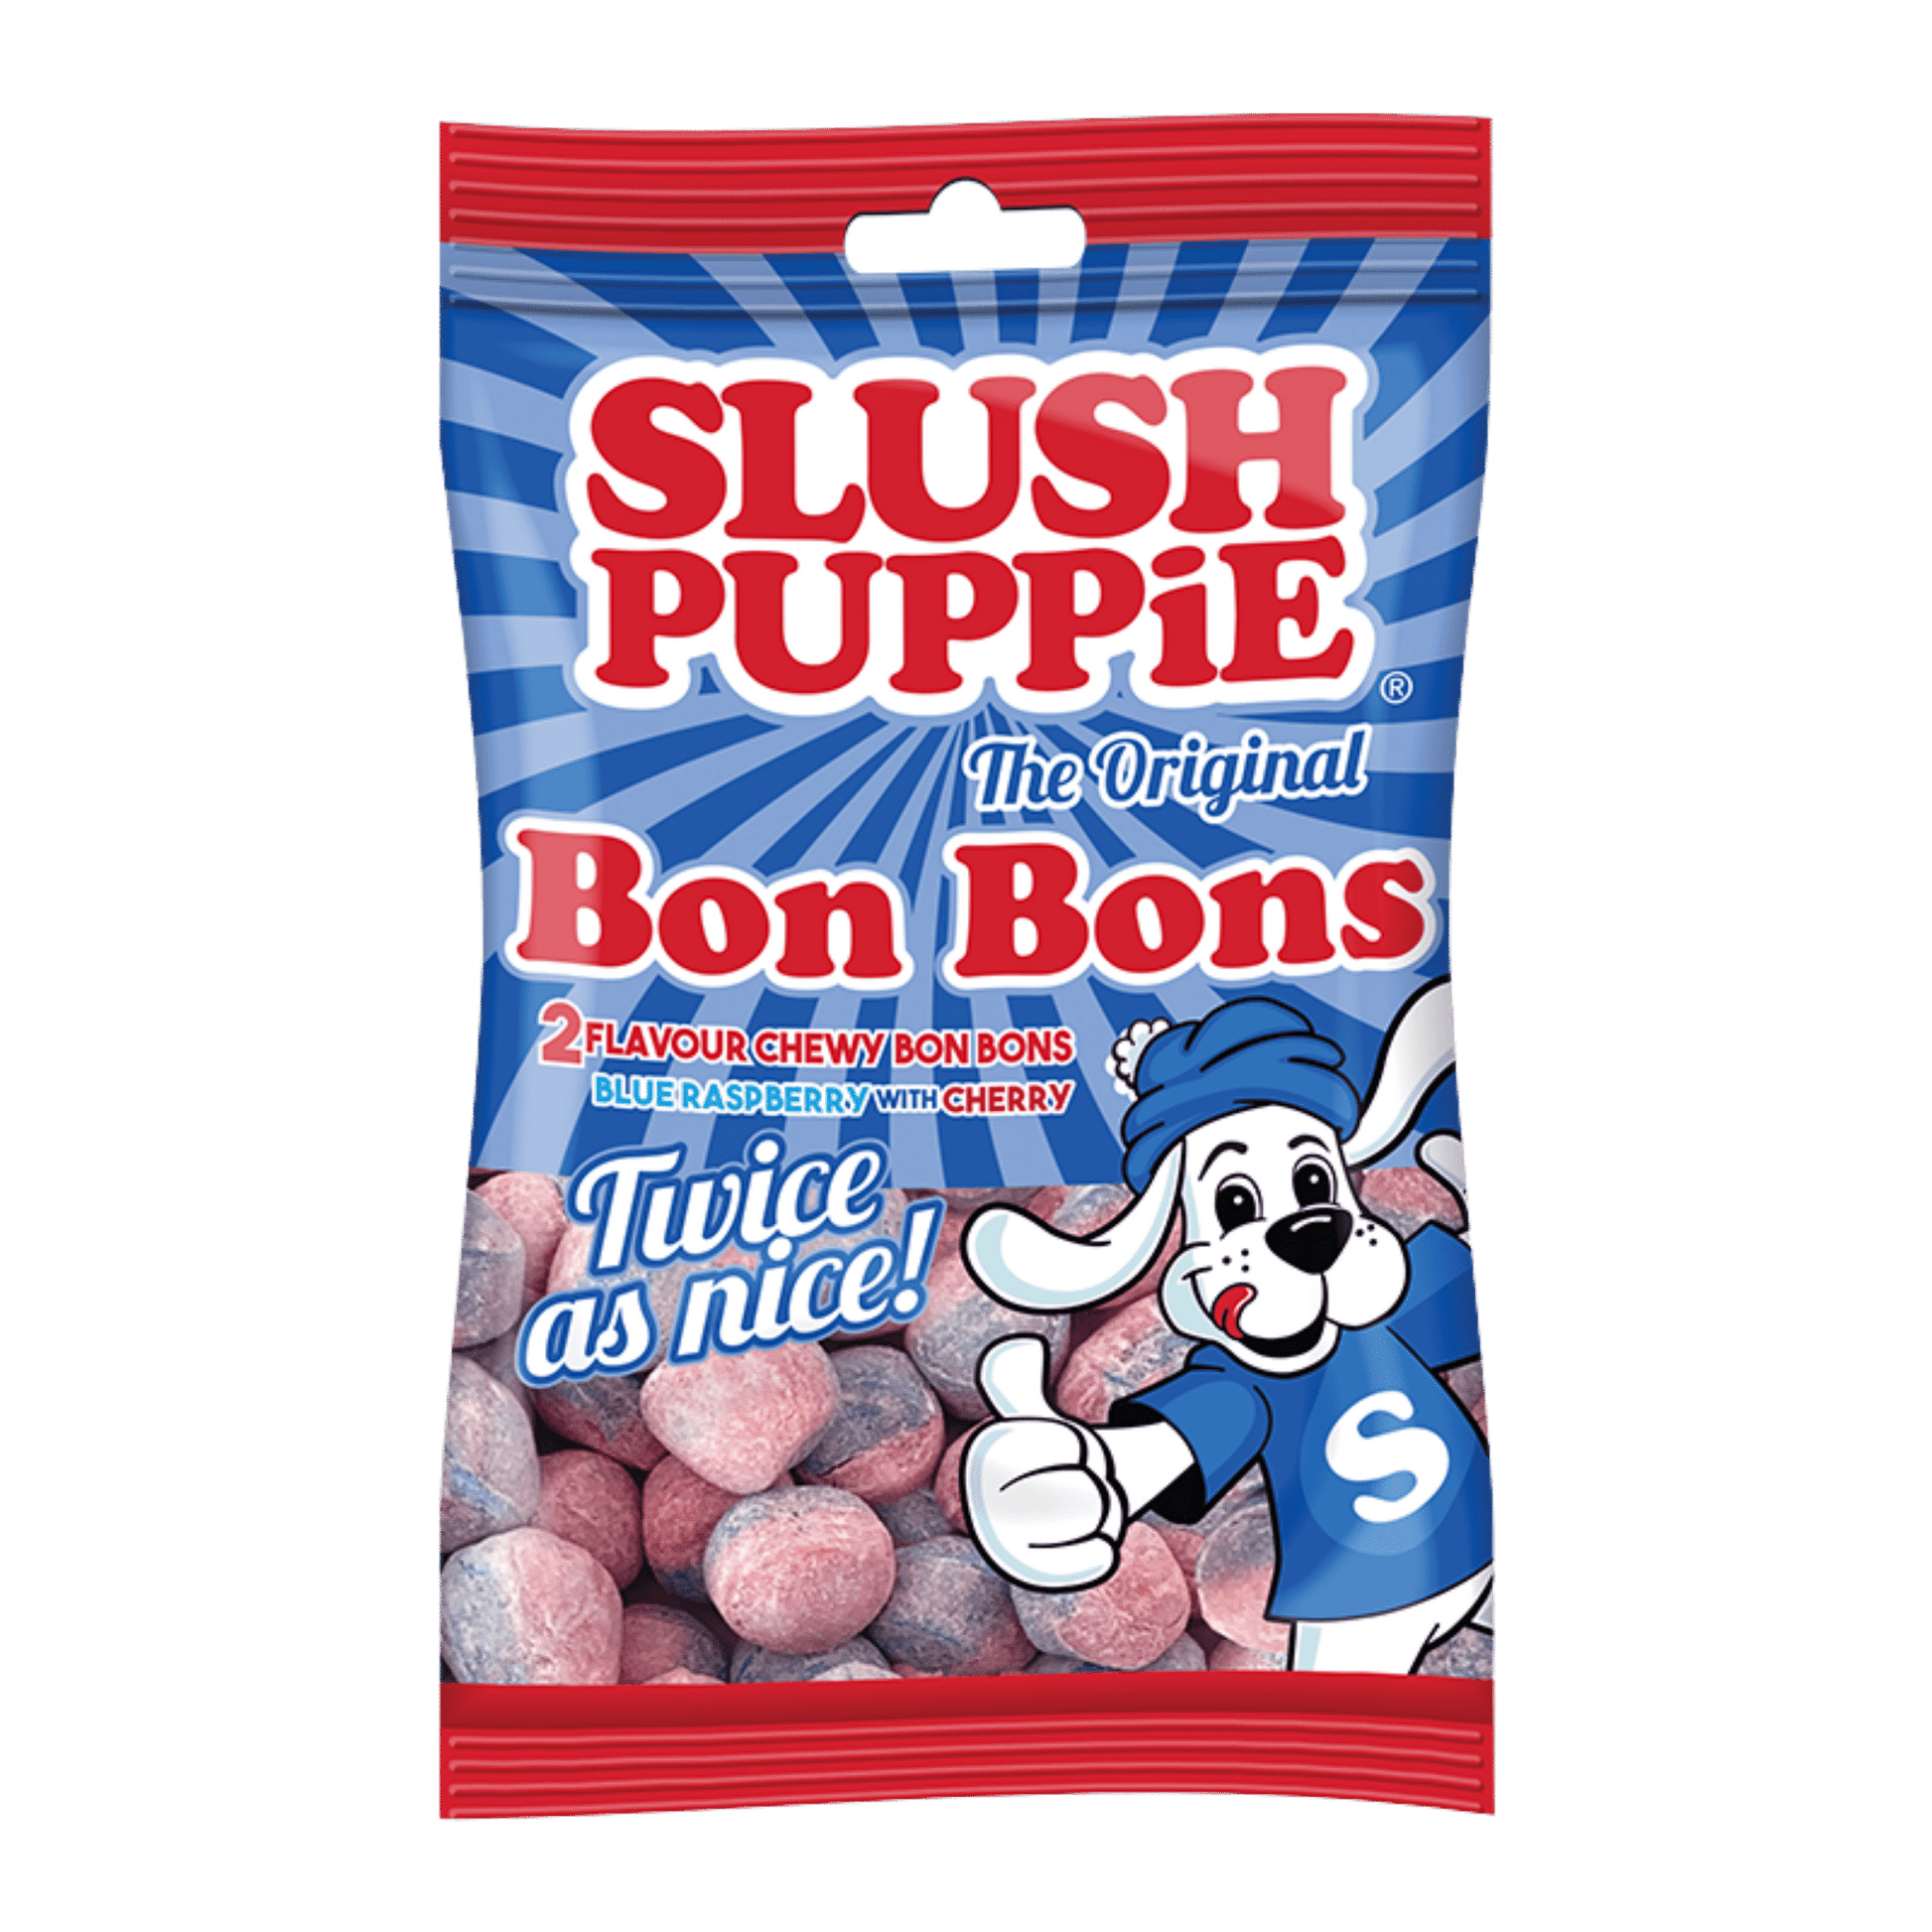 Slush Puppie Bon Bons (125g) - Candy & Chocolate - Scran.ie